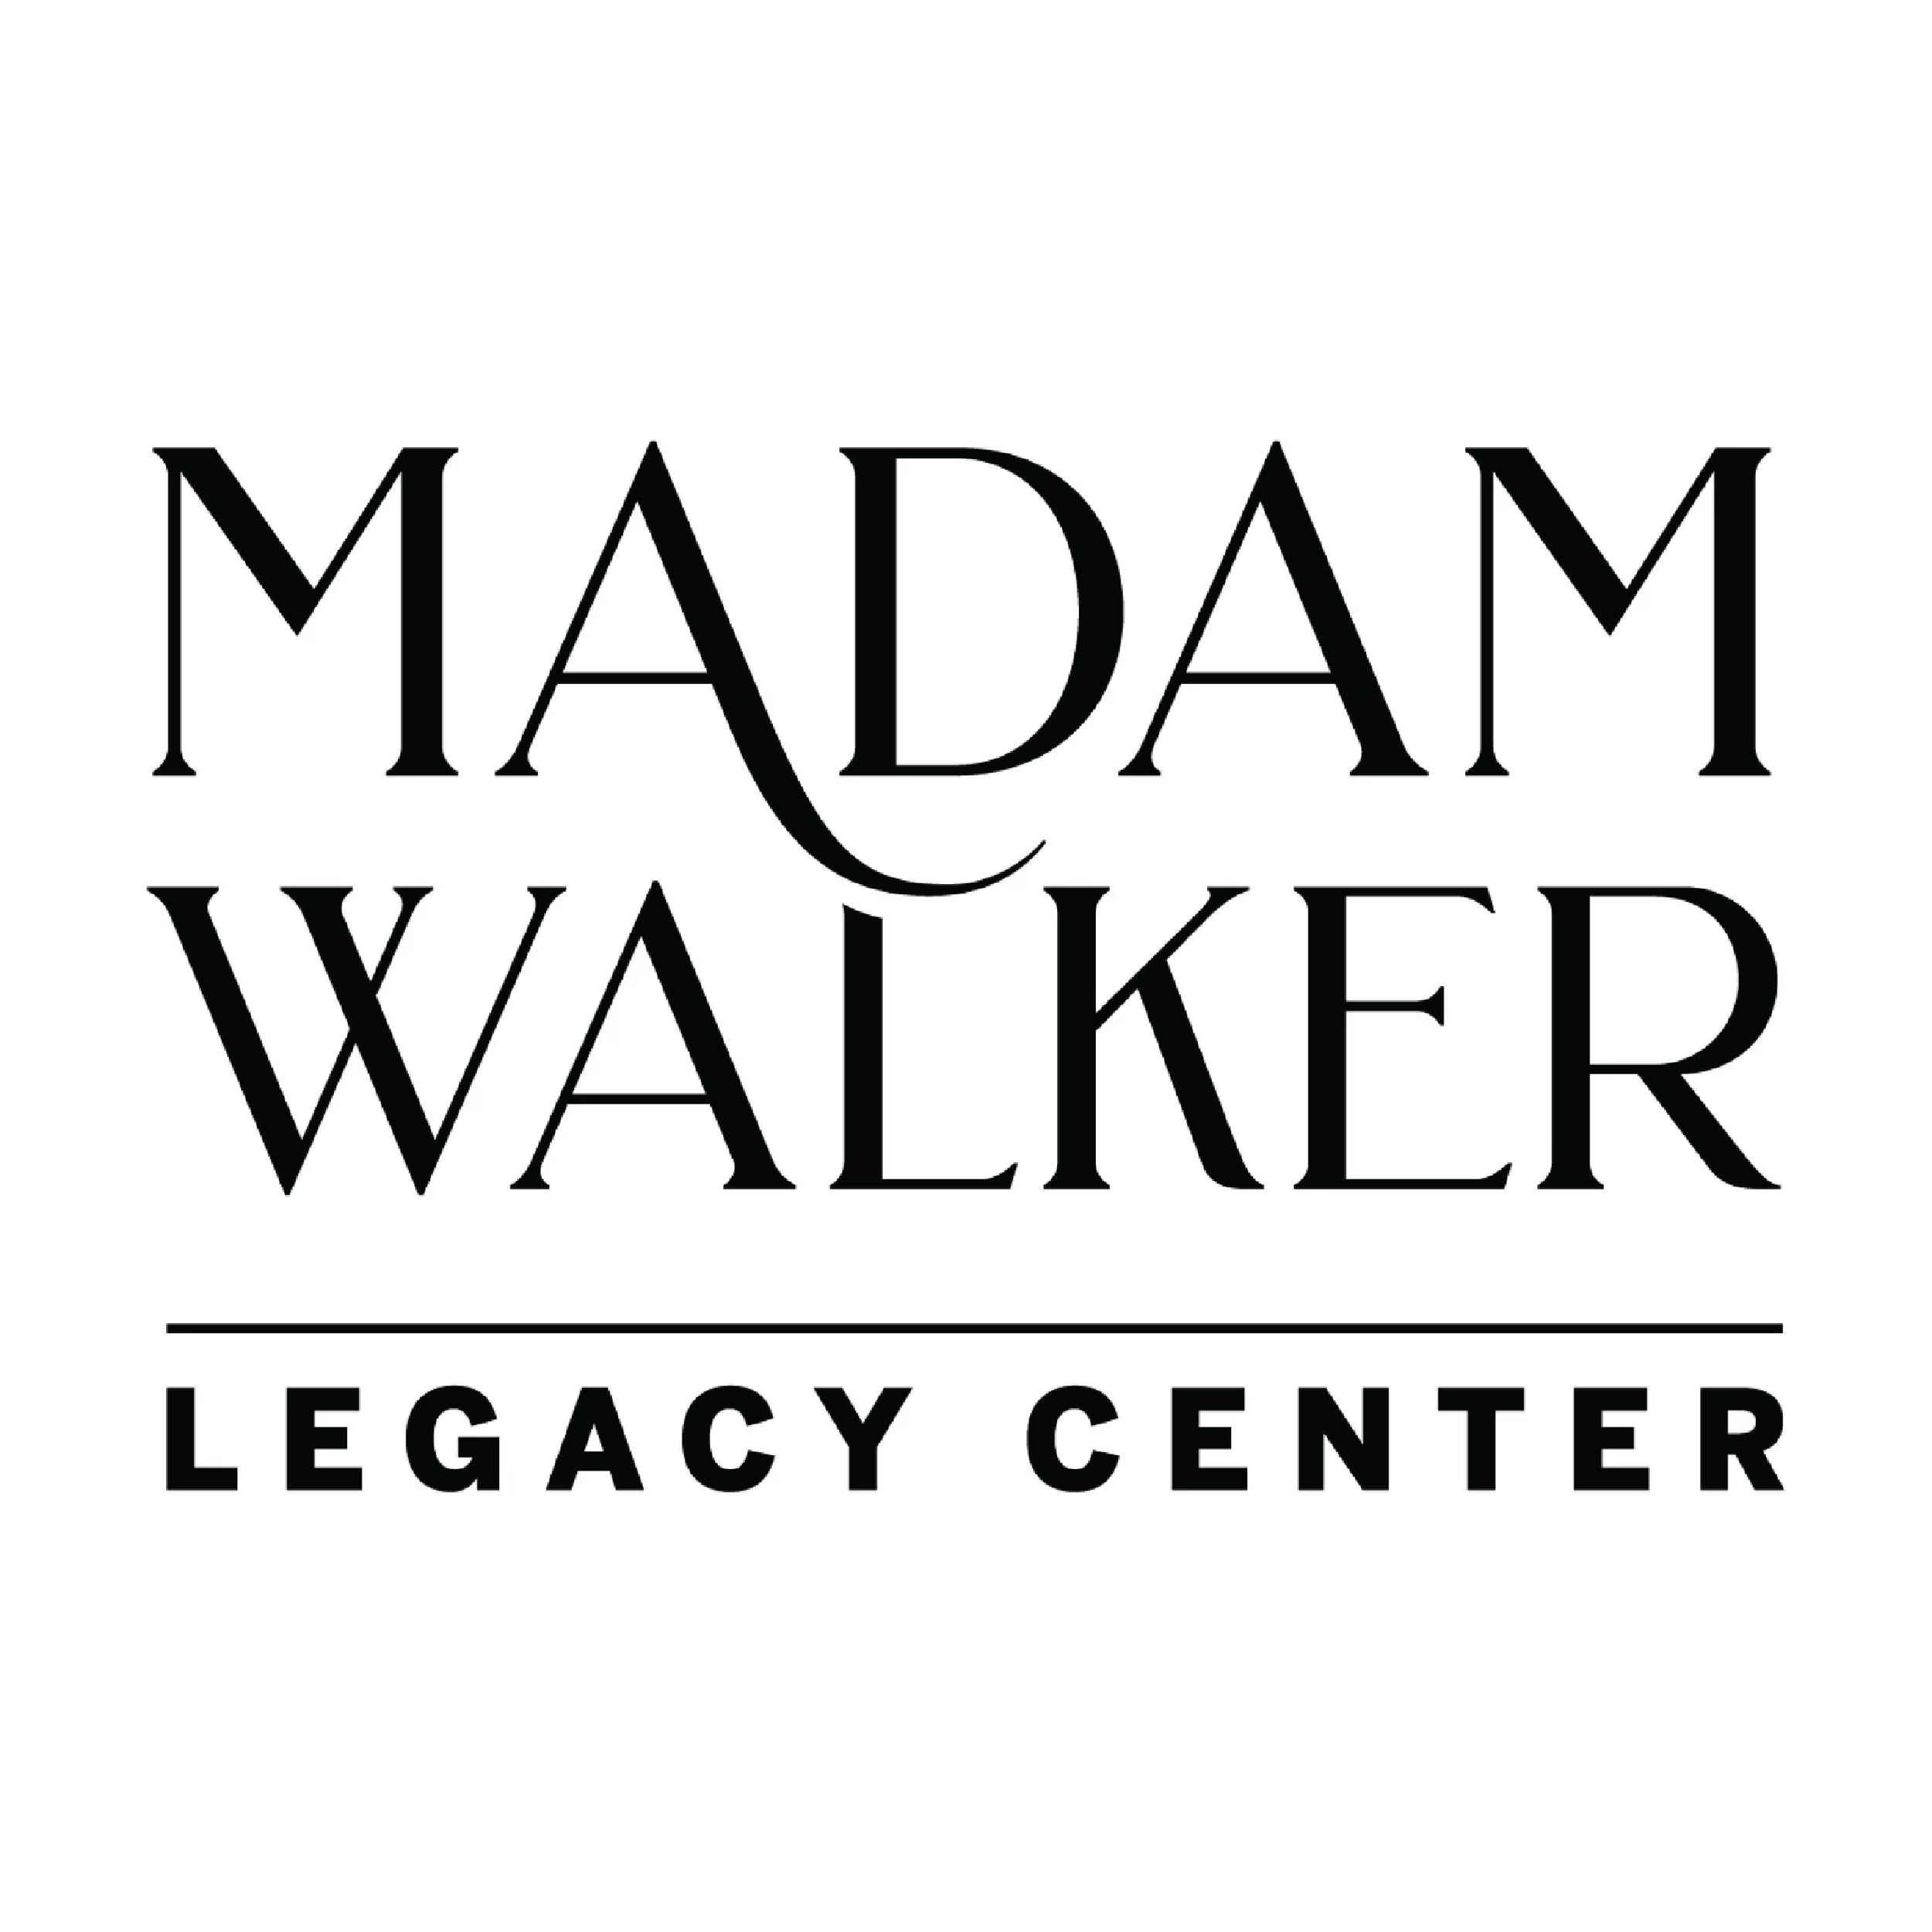 Madam Walker Legacy Center logo